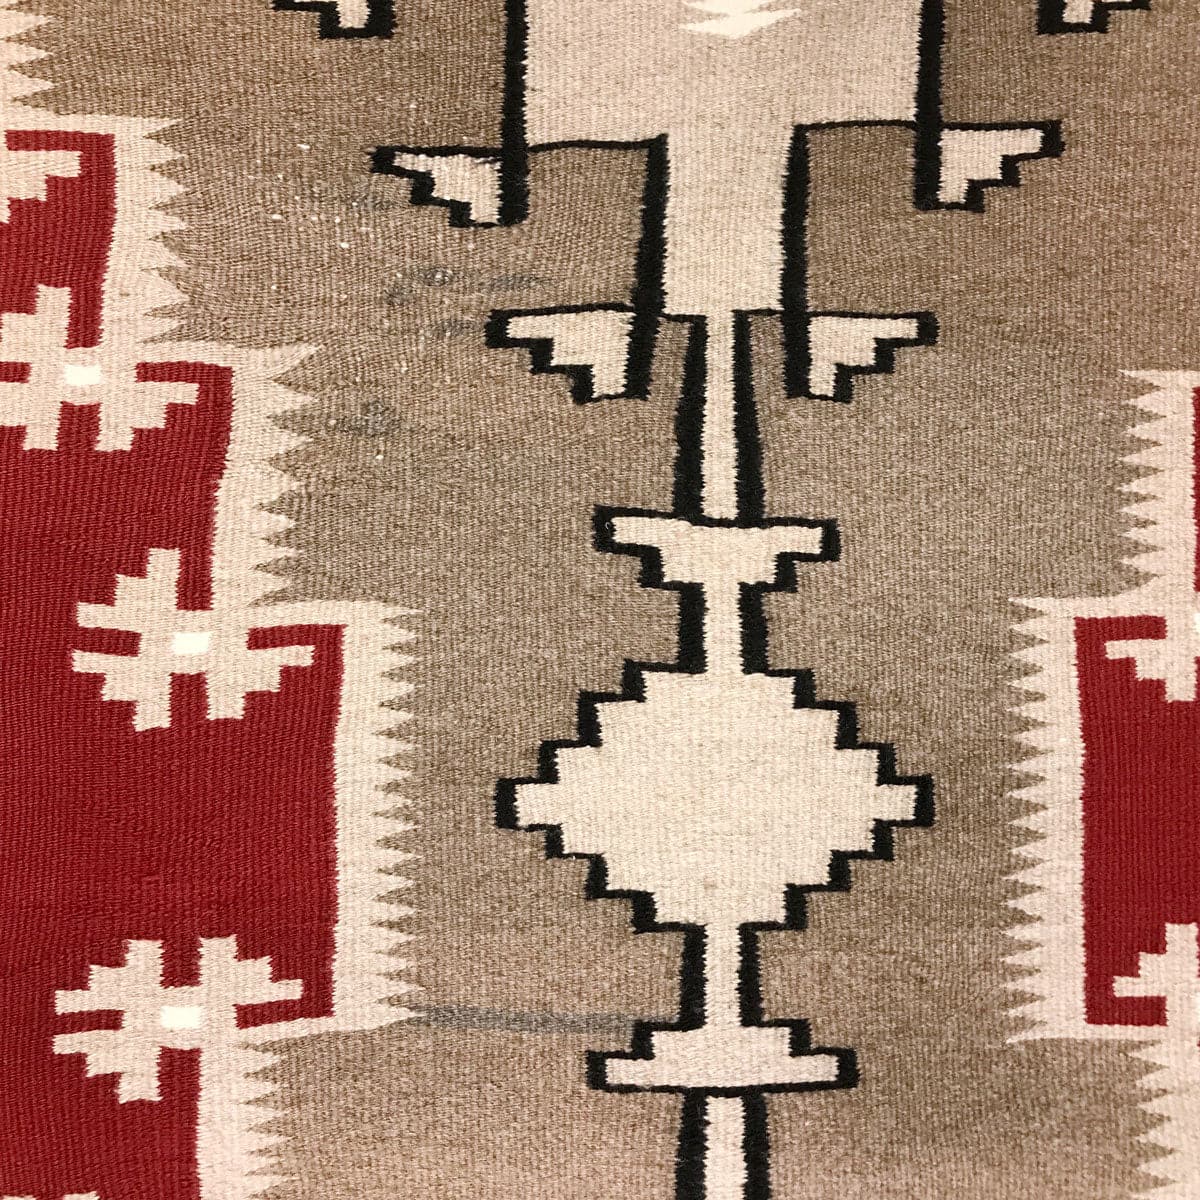 Navajo Klagetoh Rug c. 1970s, 110" x 73.5" (T91824A-0215-002)6